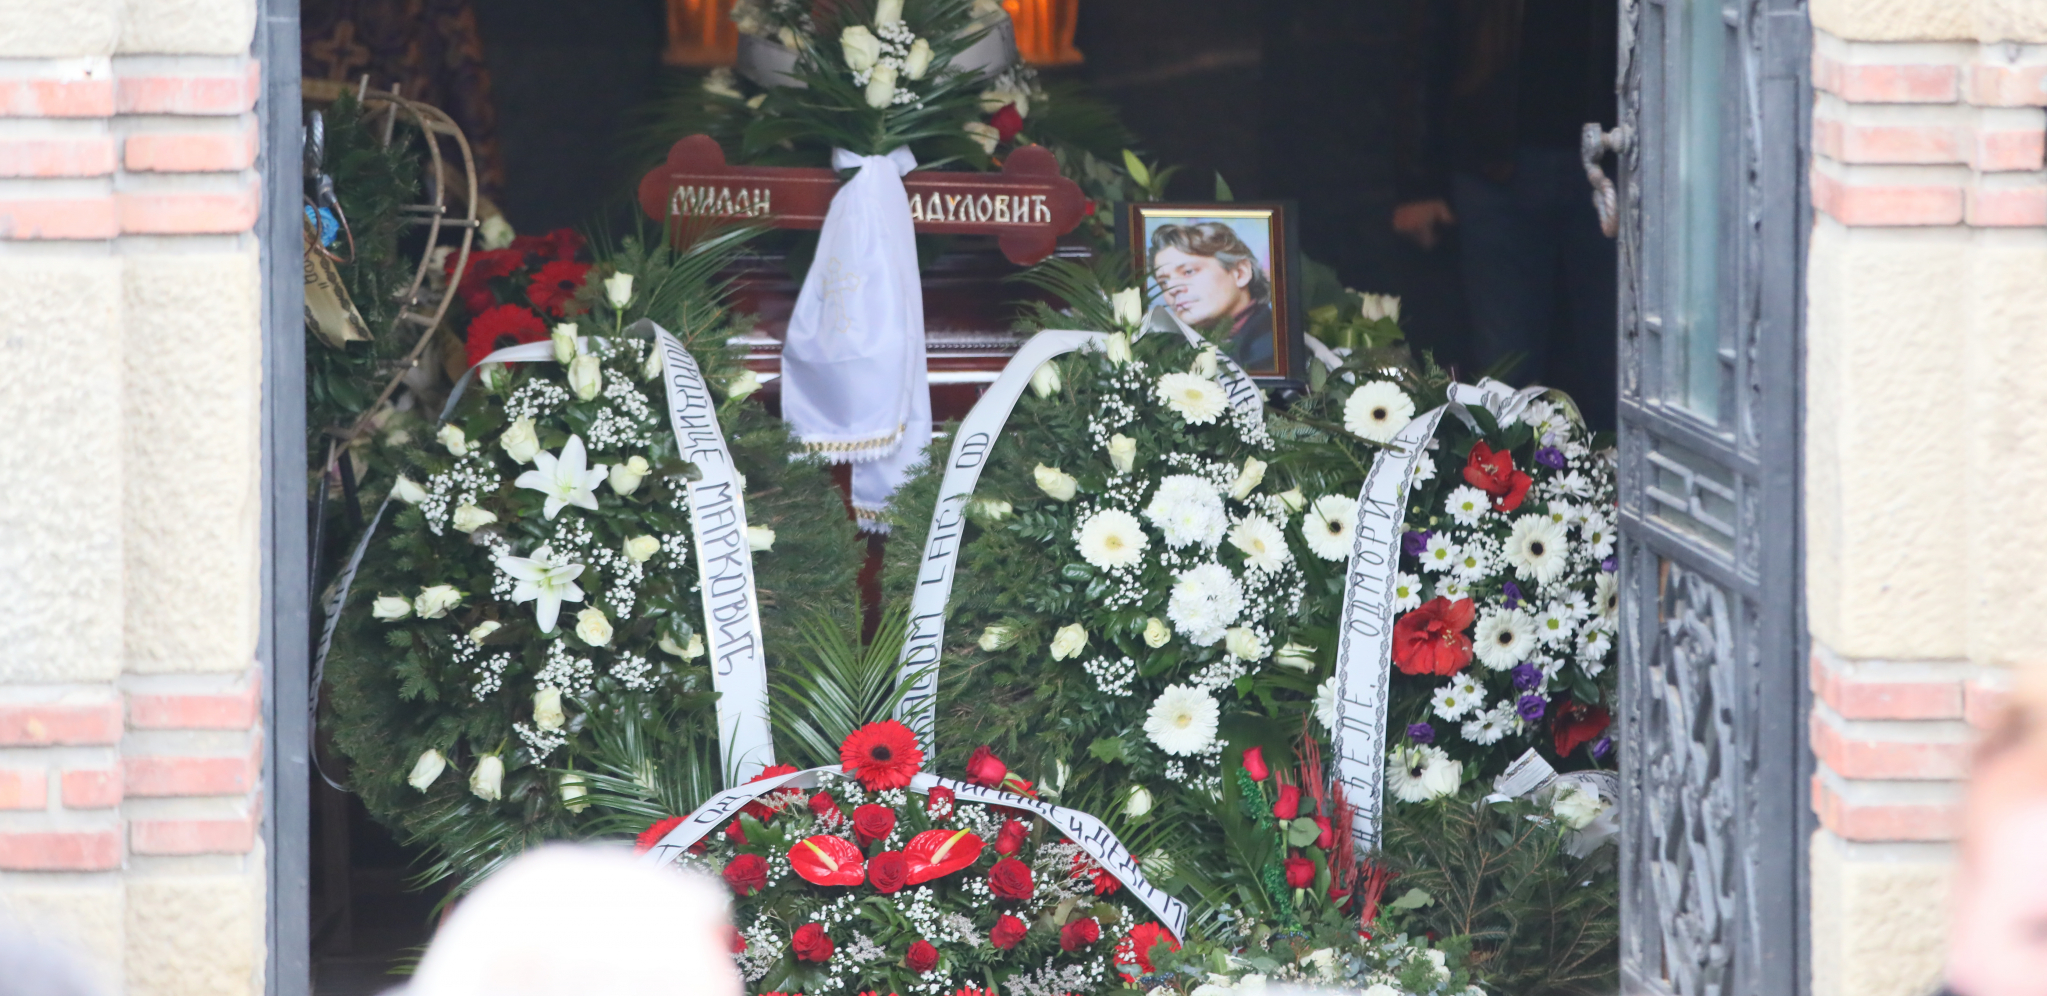 SAHRANJEN MILAN LAĆA RADULOVIĆ Večno počiva pored majke i brata! Futa nad grobom sina briše suzne TUGA I JECAJI PORODICE I PRIJATELJA(FOTO/VIDEO)